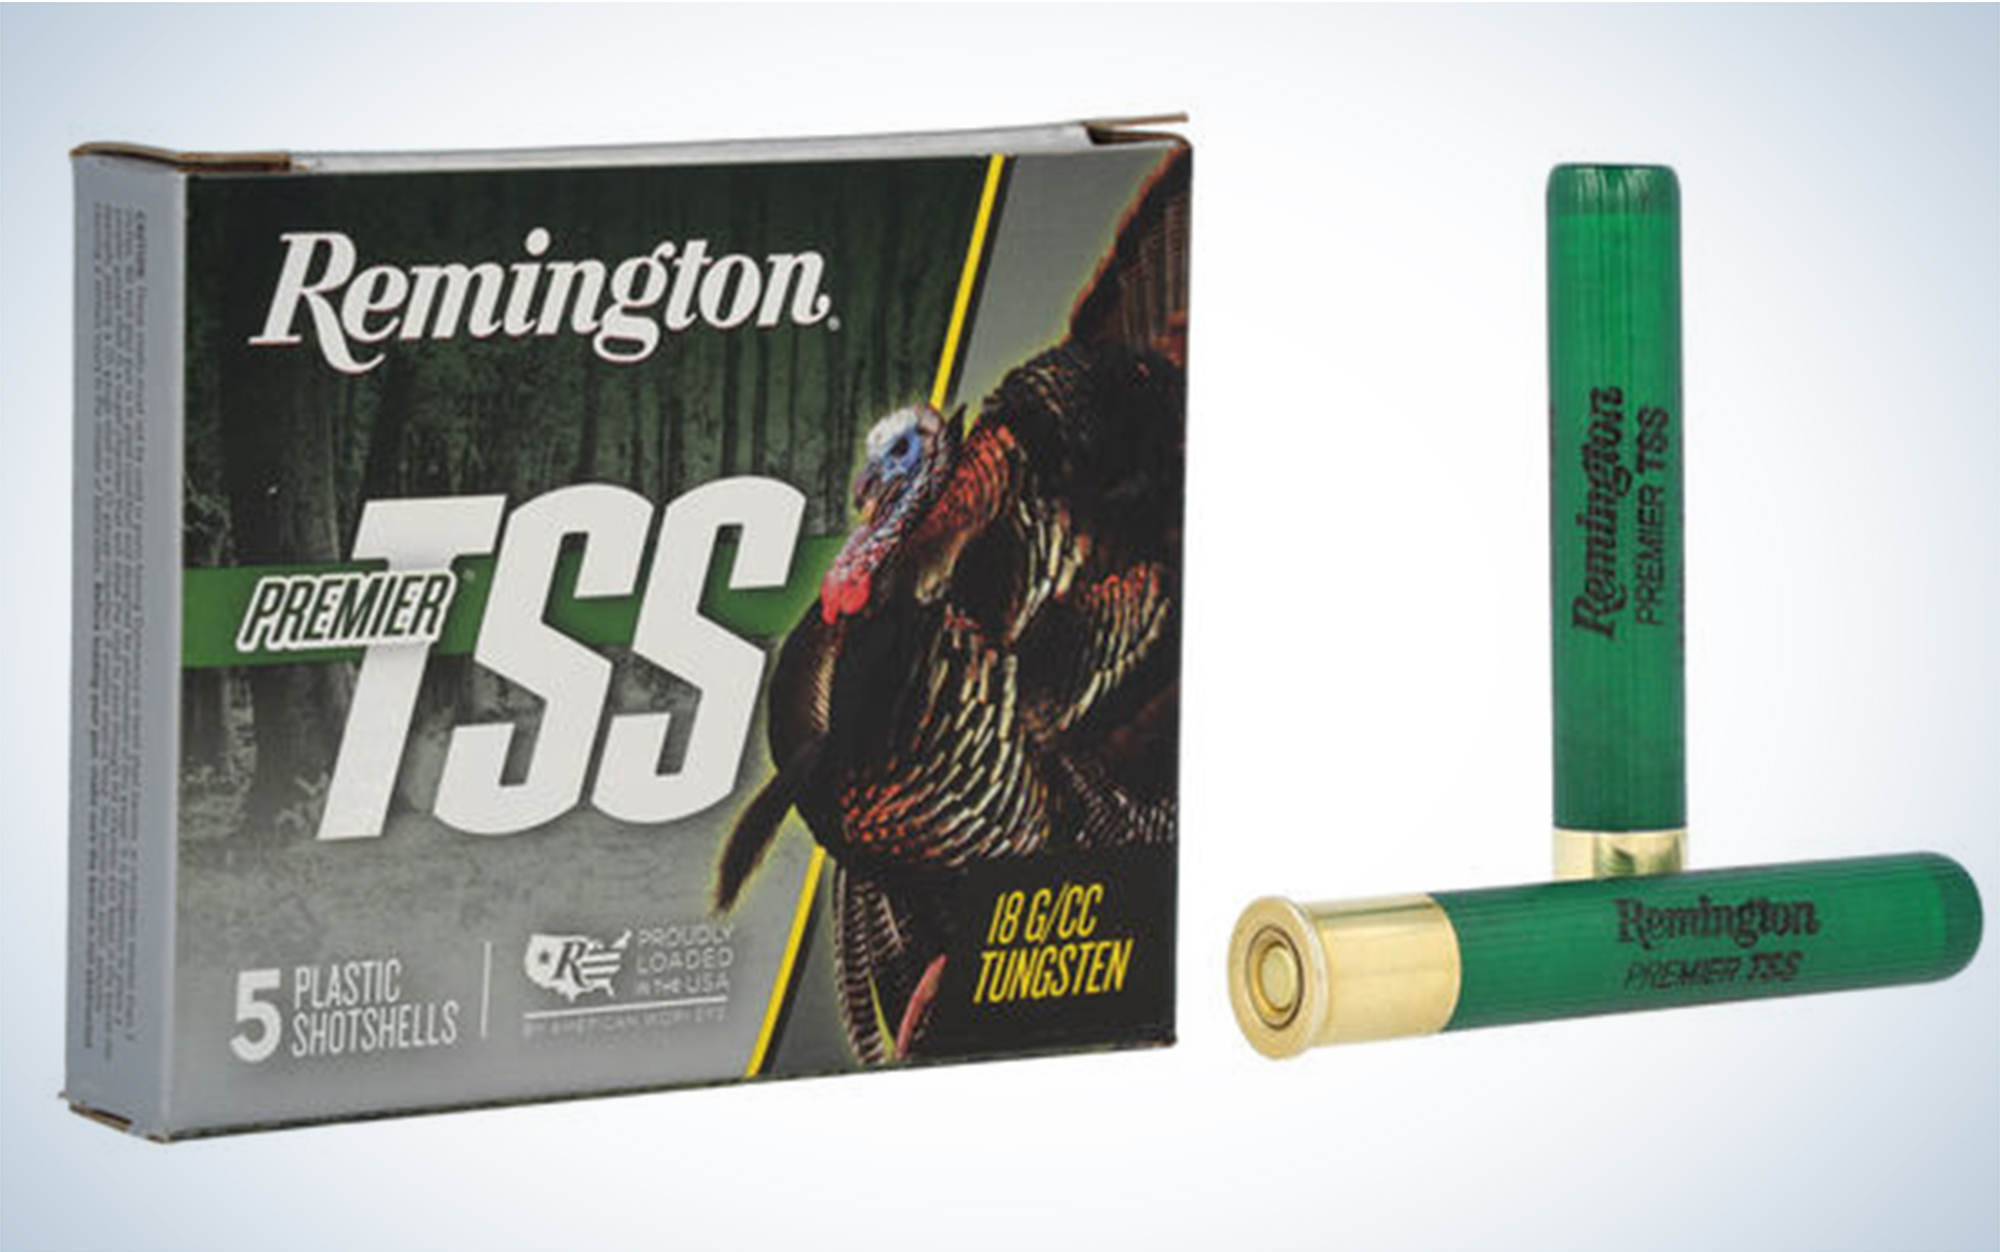 The Remington Premier TSS is one of the best .410 turkey loads.